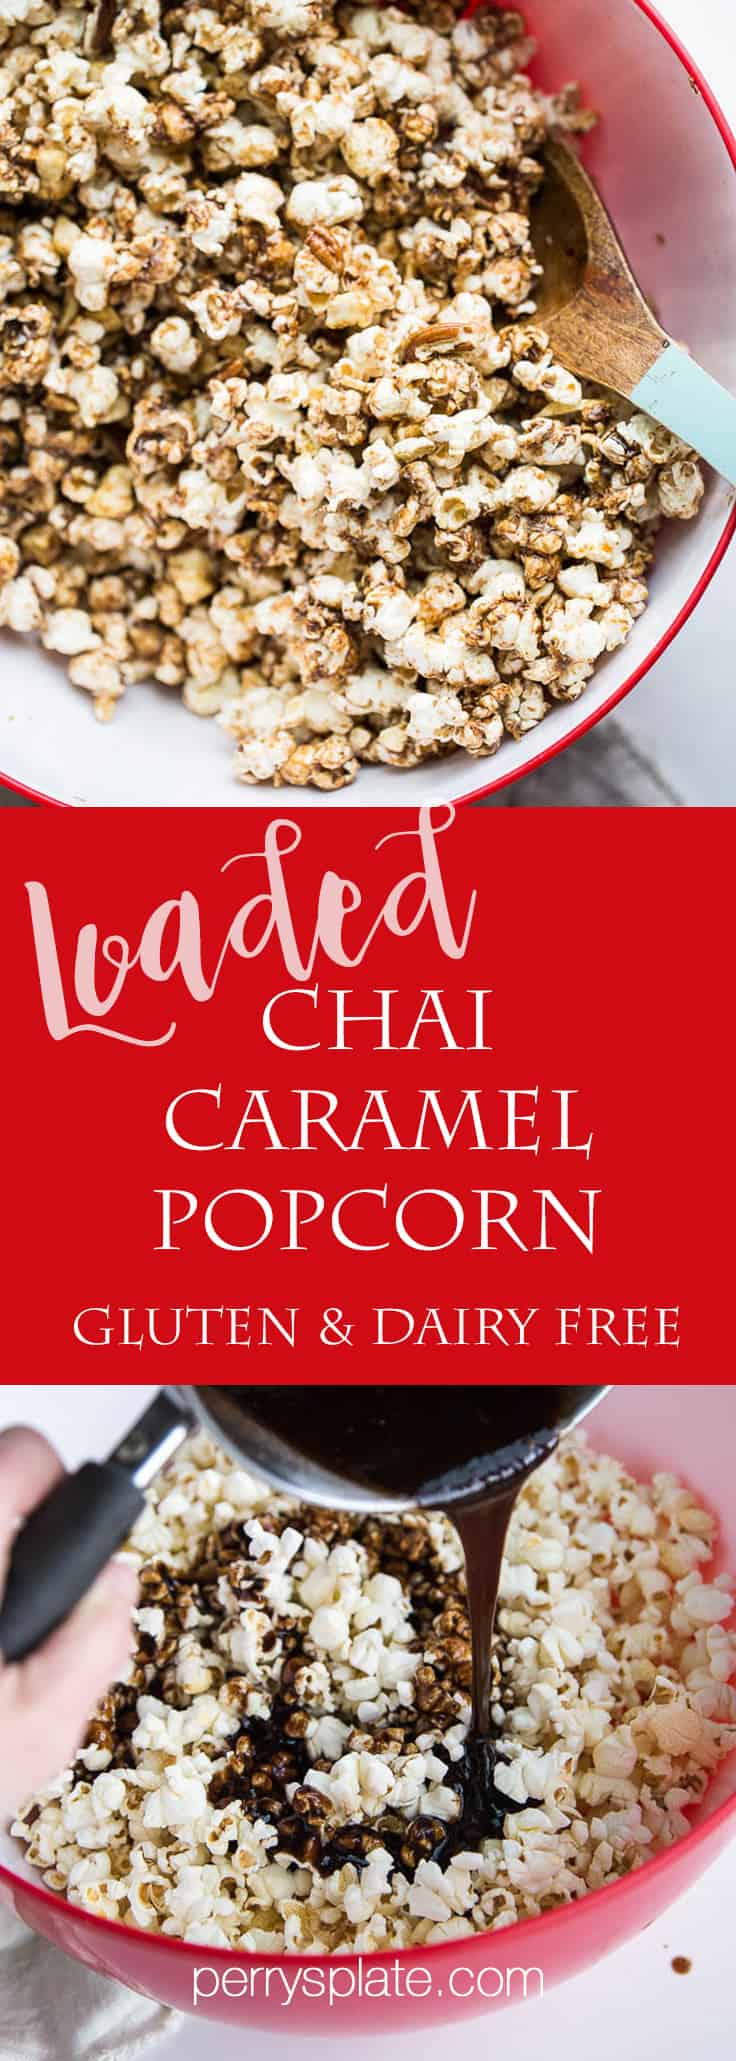 Loaded Chai Caramel Popcorn (Dairy & Gluten Free!) | popcorn recipes | gluten-free recipes | dairy-free recipes | chai recipes | Christmas recipes | holiday gift ideas | neighbor treat ideas | perrysplate.com